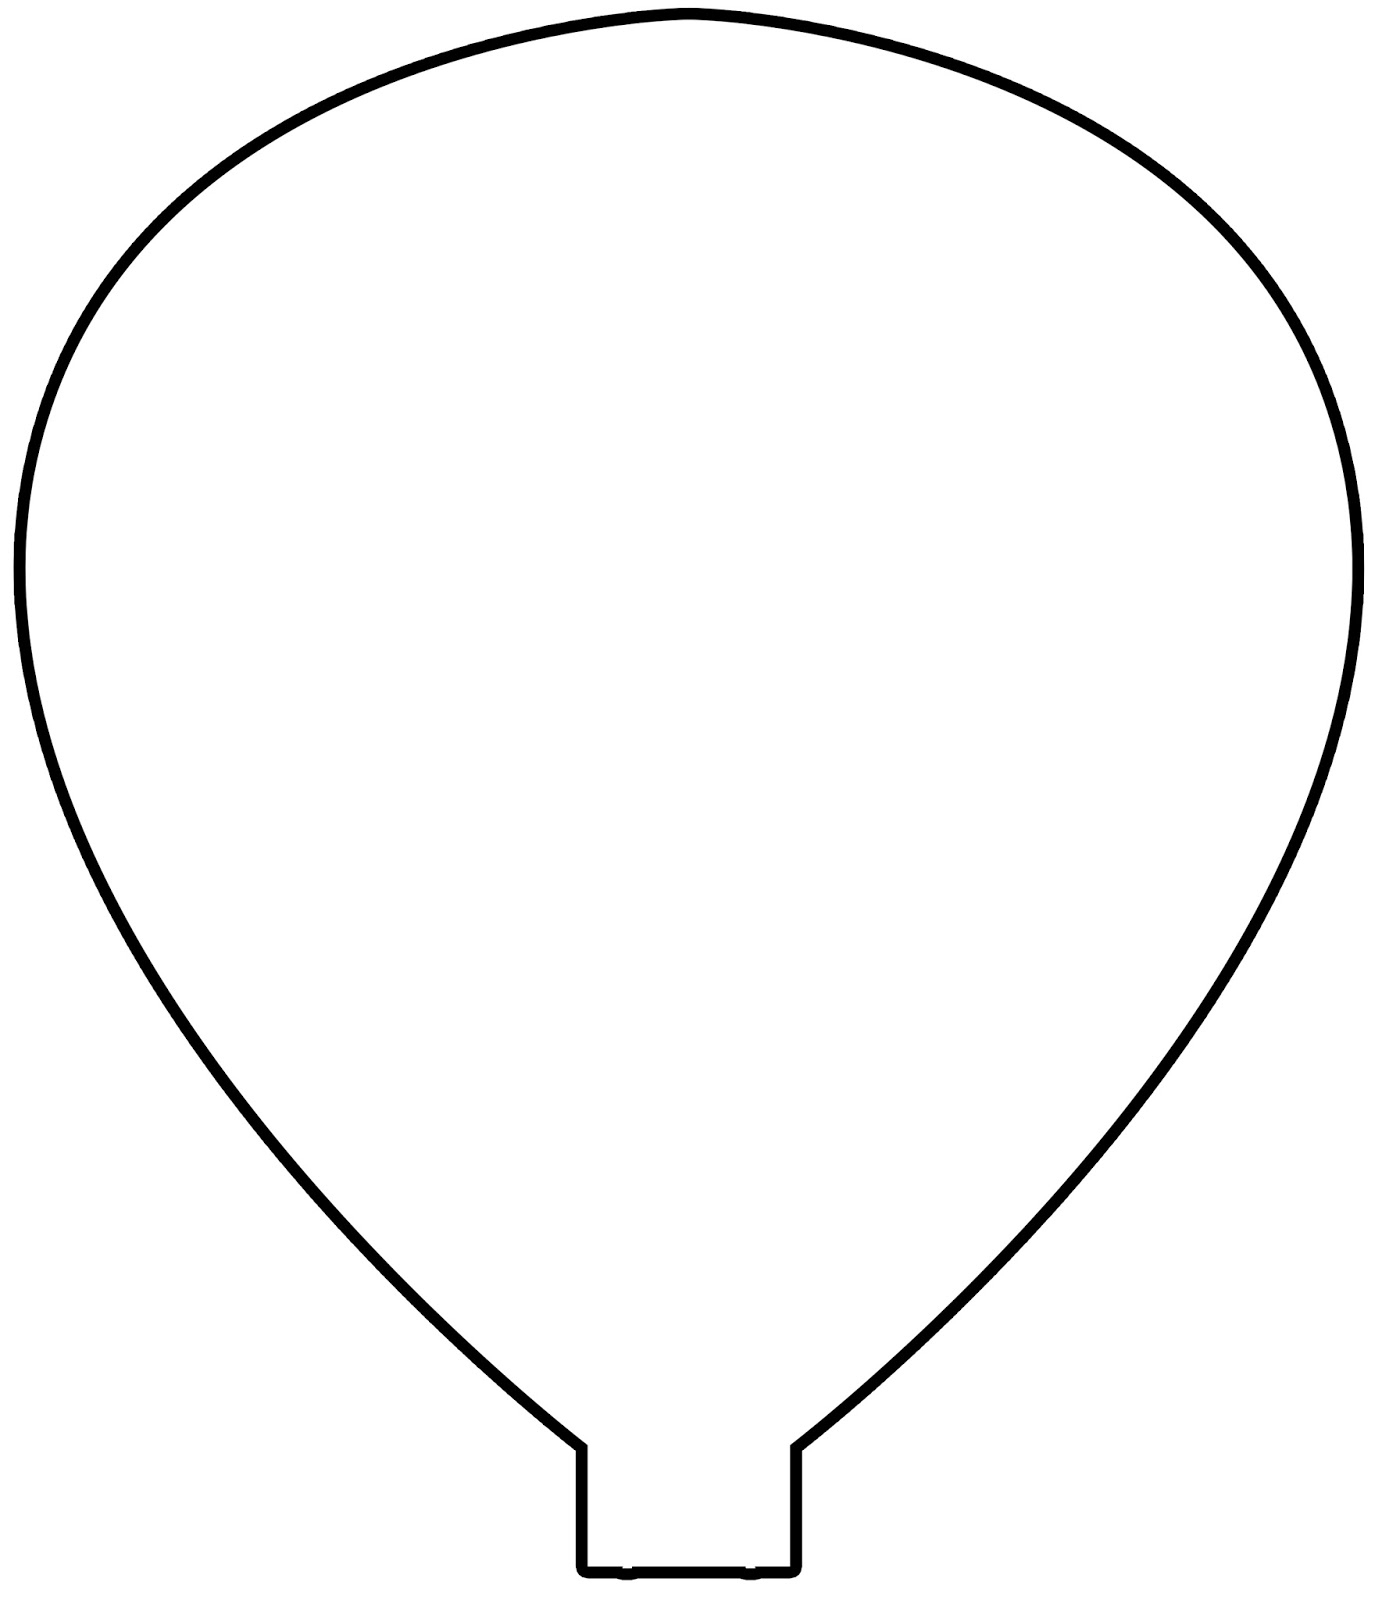 29 Images Of Hot Air Ballon Template | Masorler With Regard To Hot Air Balloon Template Printable